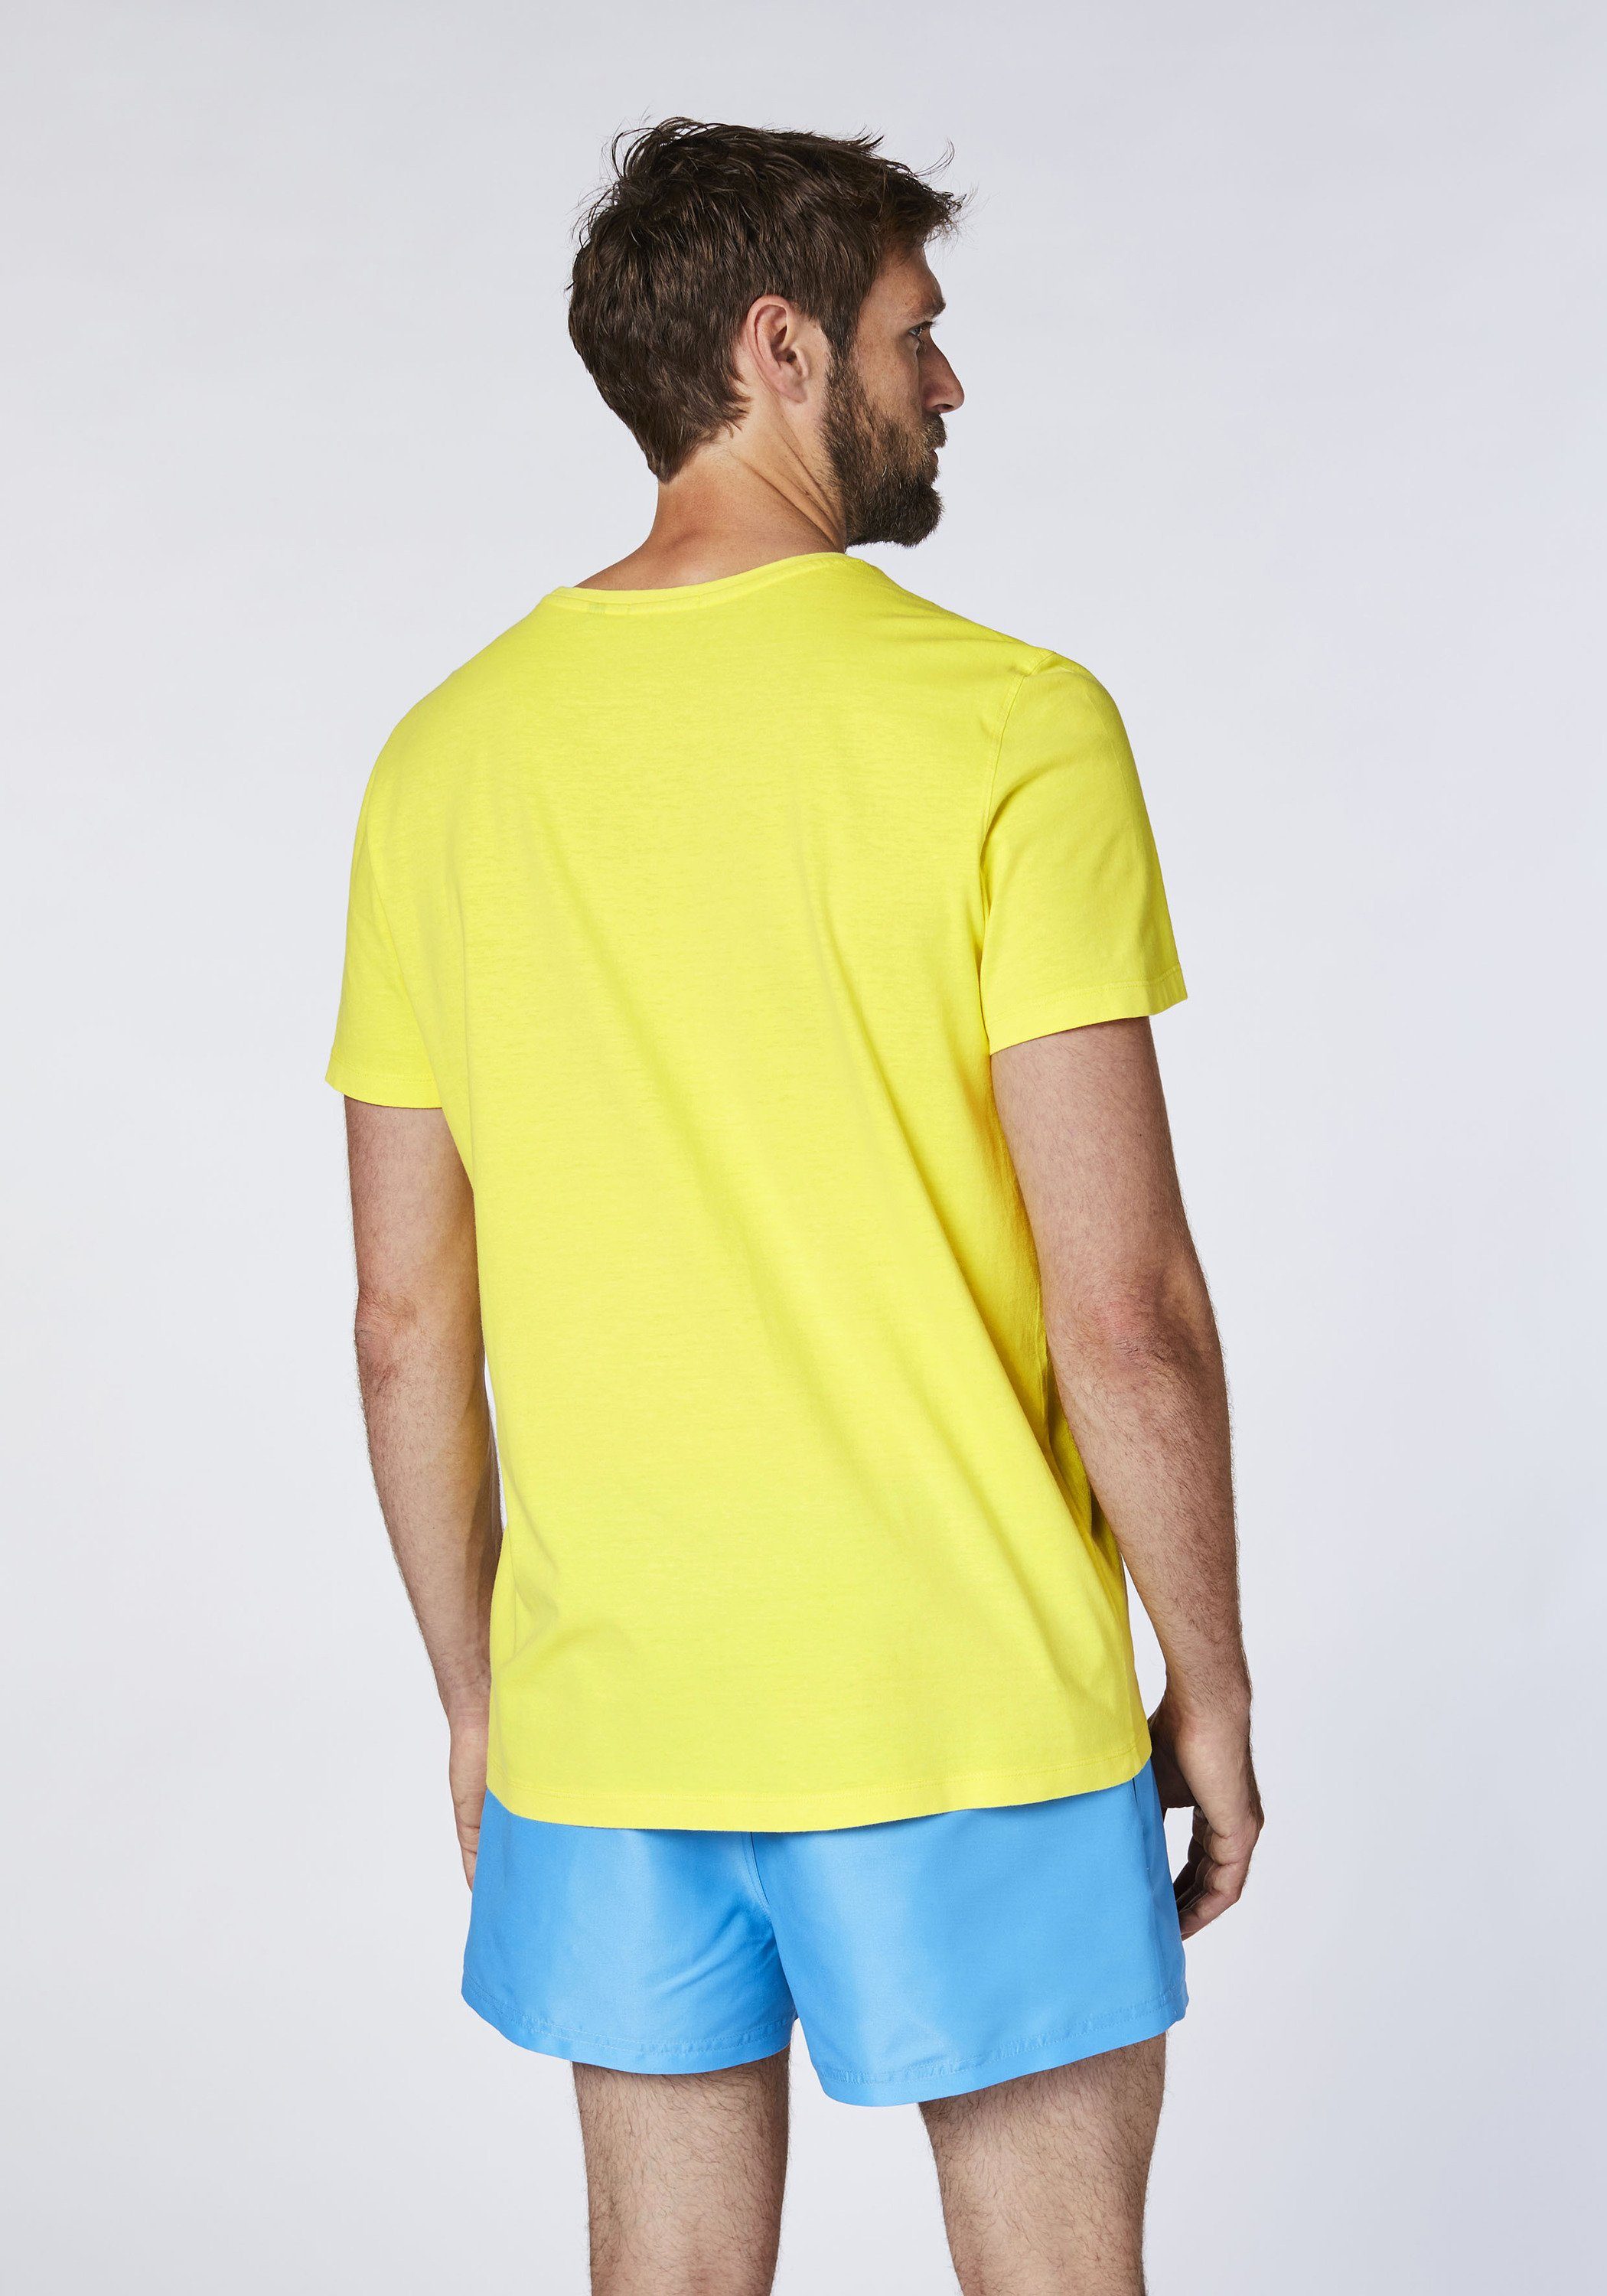 Print-Shirt 1 Chiemsee mit T-Shirt Frontprint PlusMinus Lemon Tonic